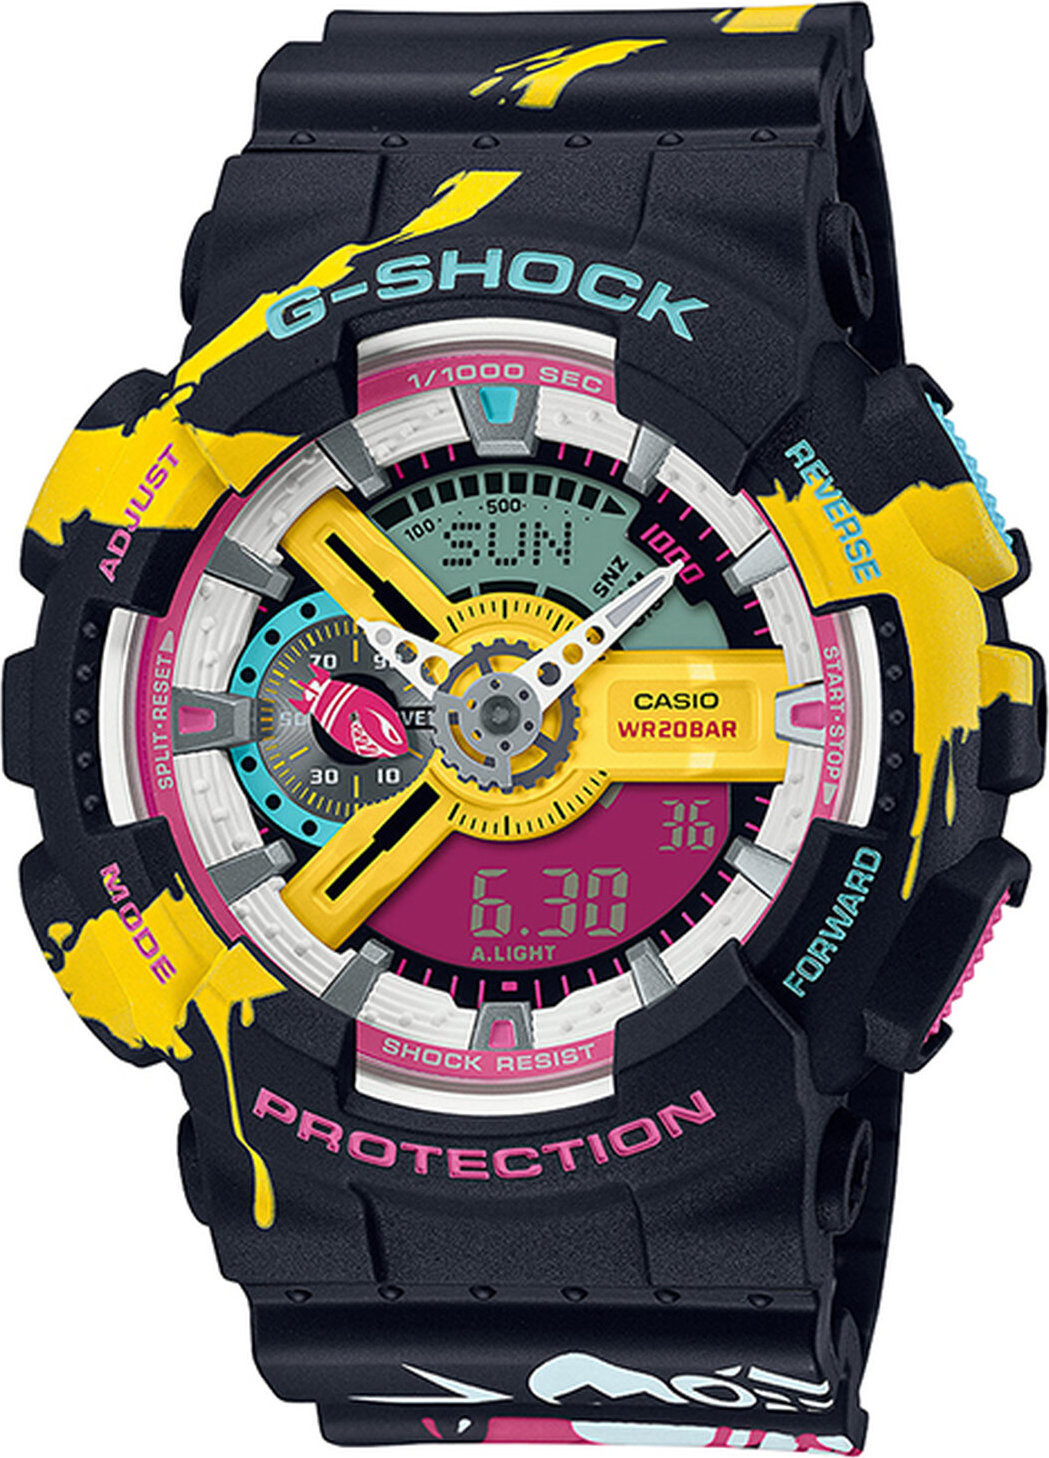 Hodinky G-Shock GA-110LL-1AER Black/Multi